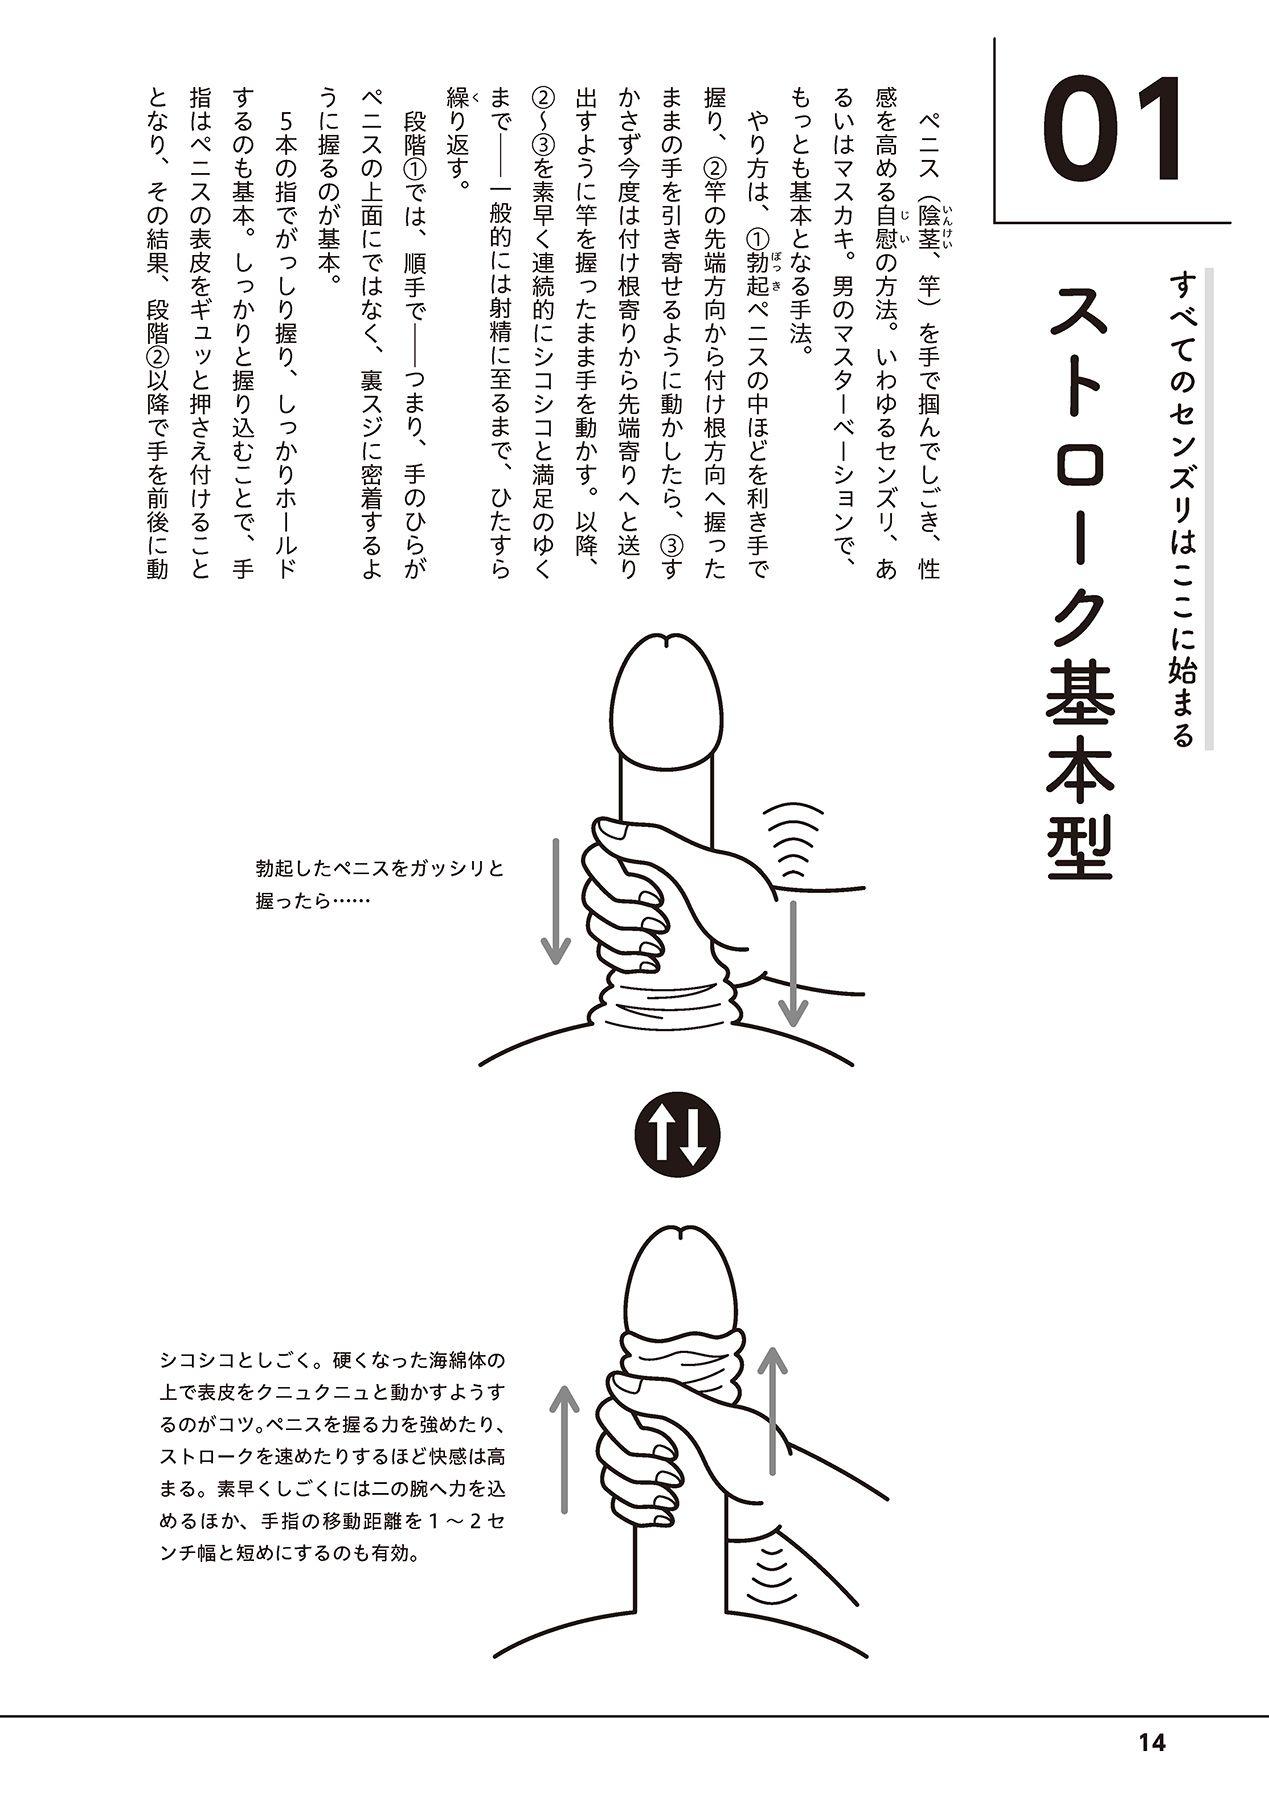 Otoko no Jii Onanie Kanzen Manual Illustration Han...... Onanie Play 15